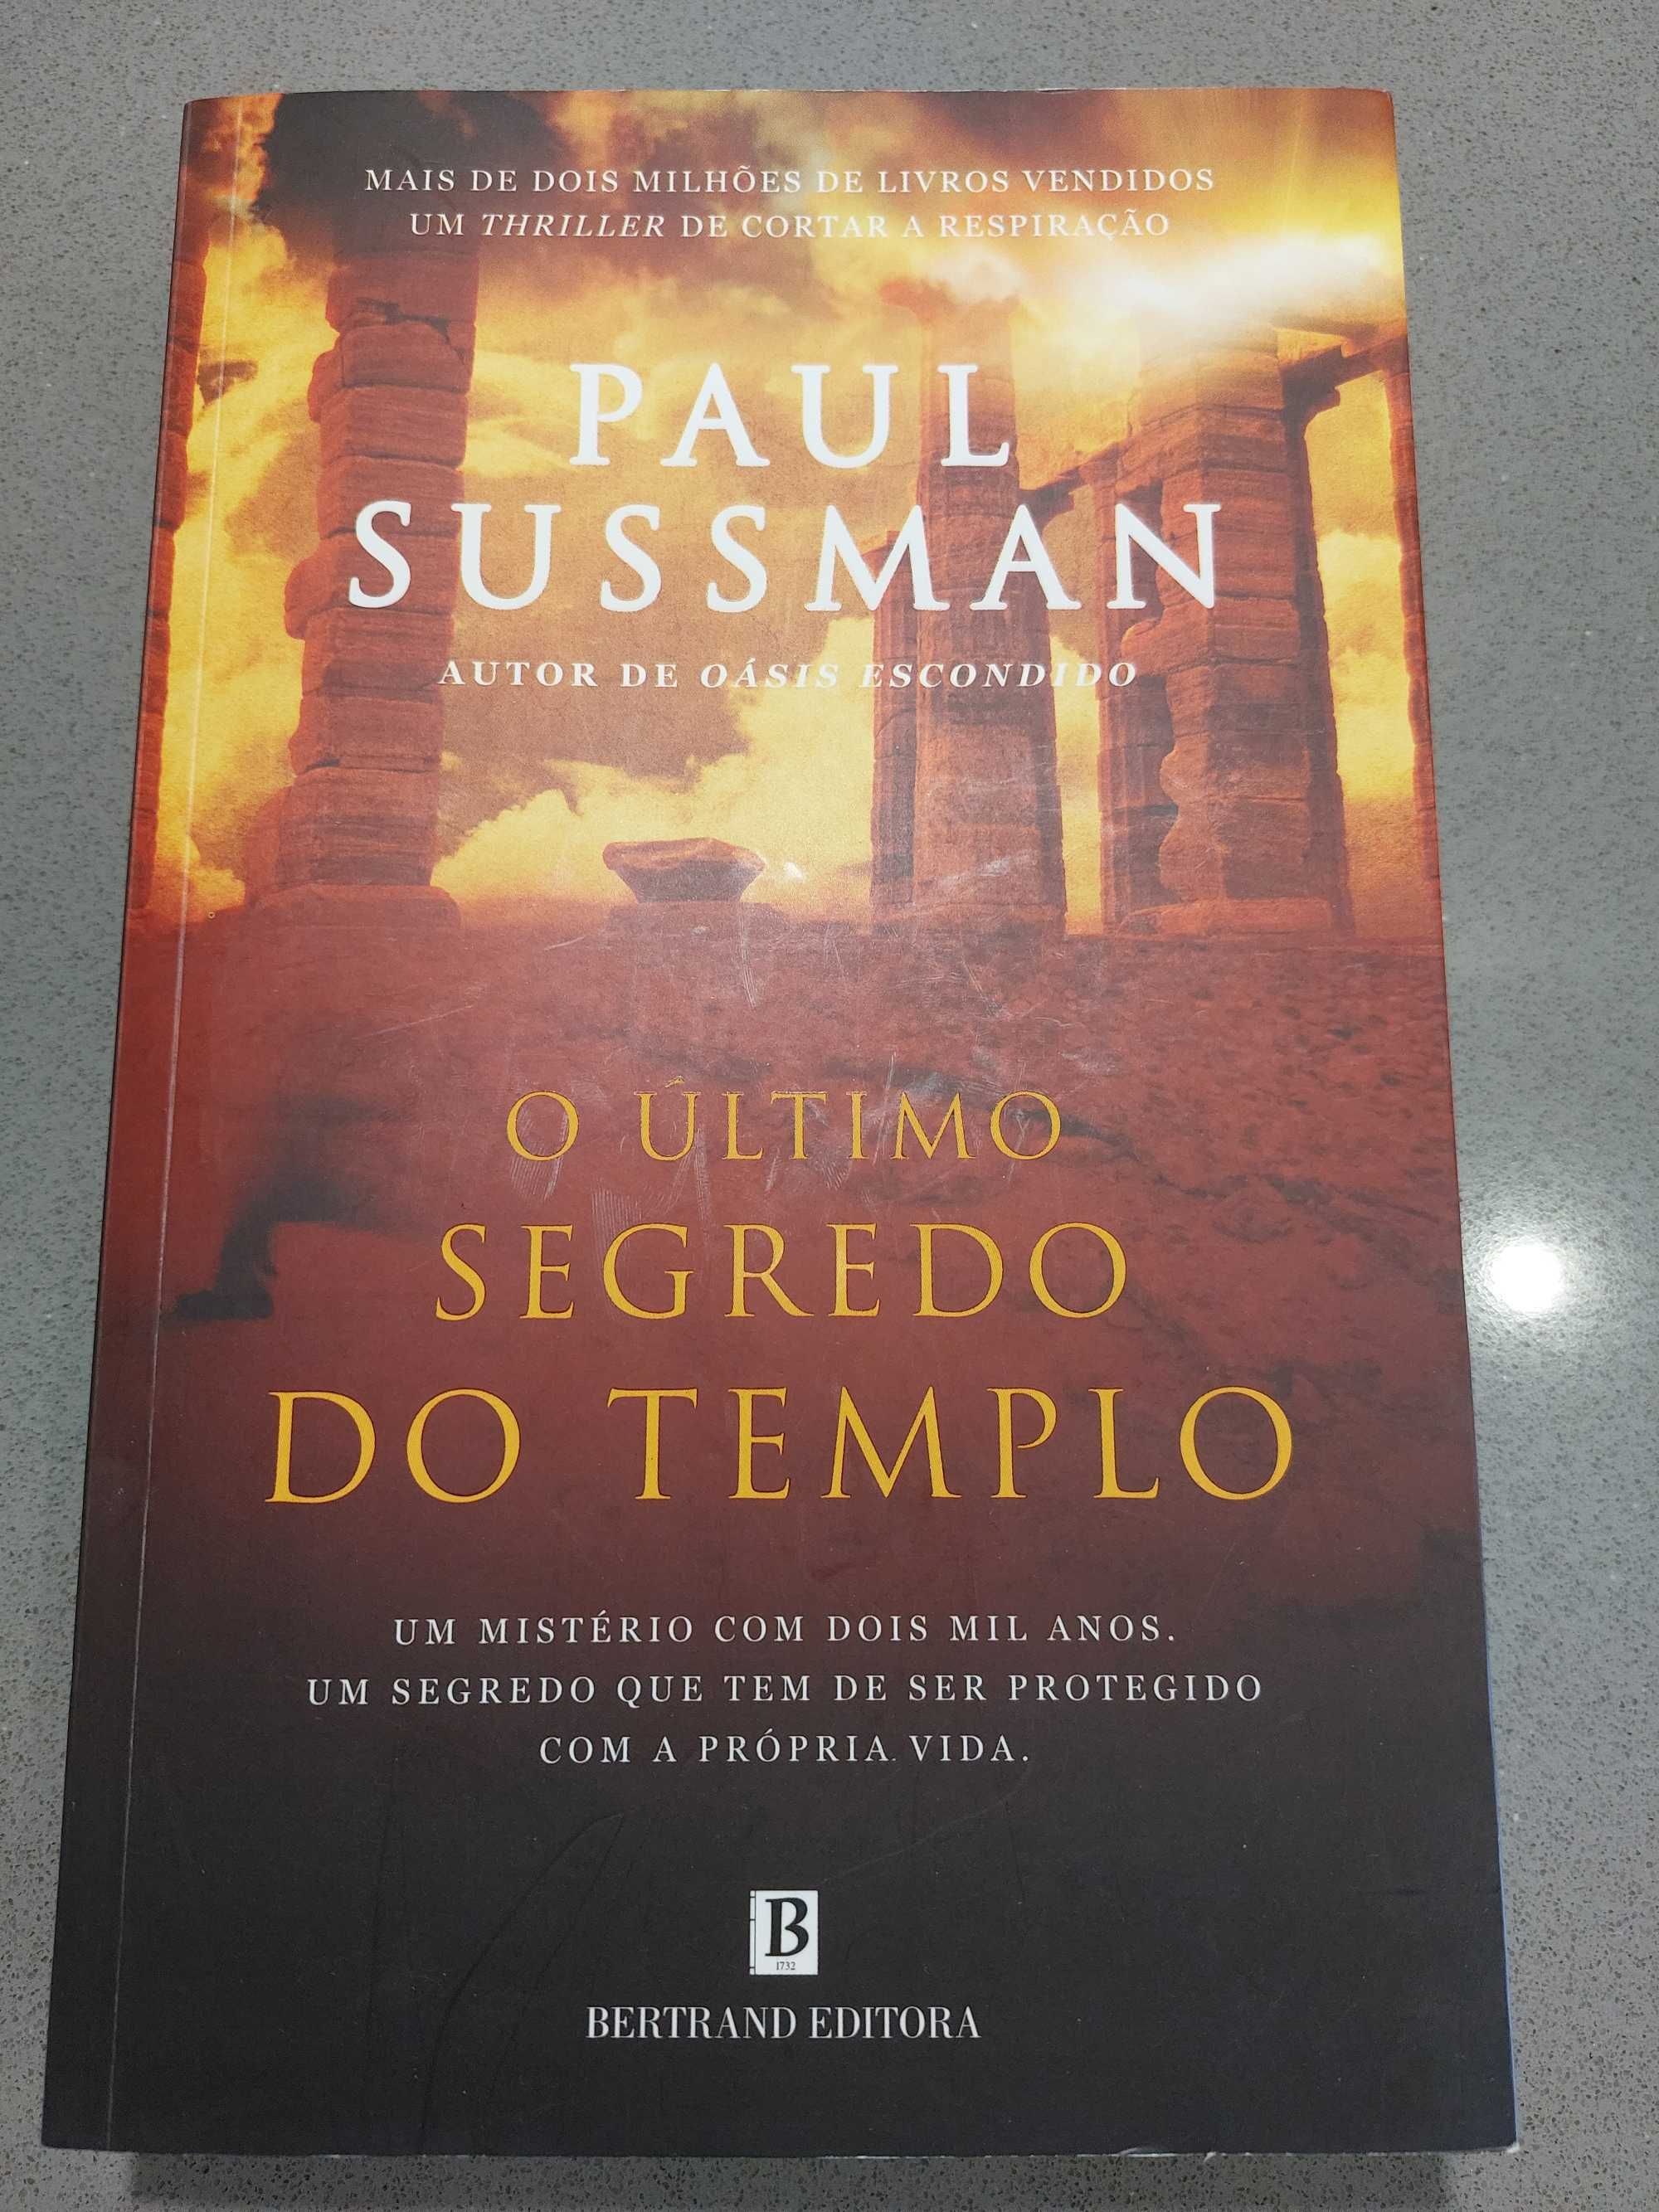 Paul Sussman - O último segredo do templo (PORTES GRATIS)